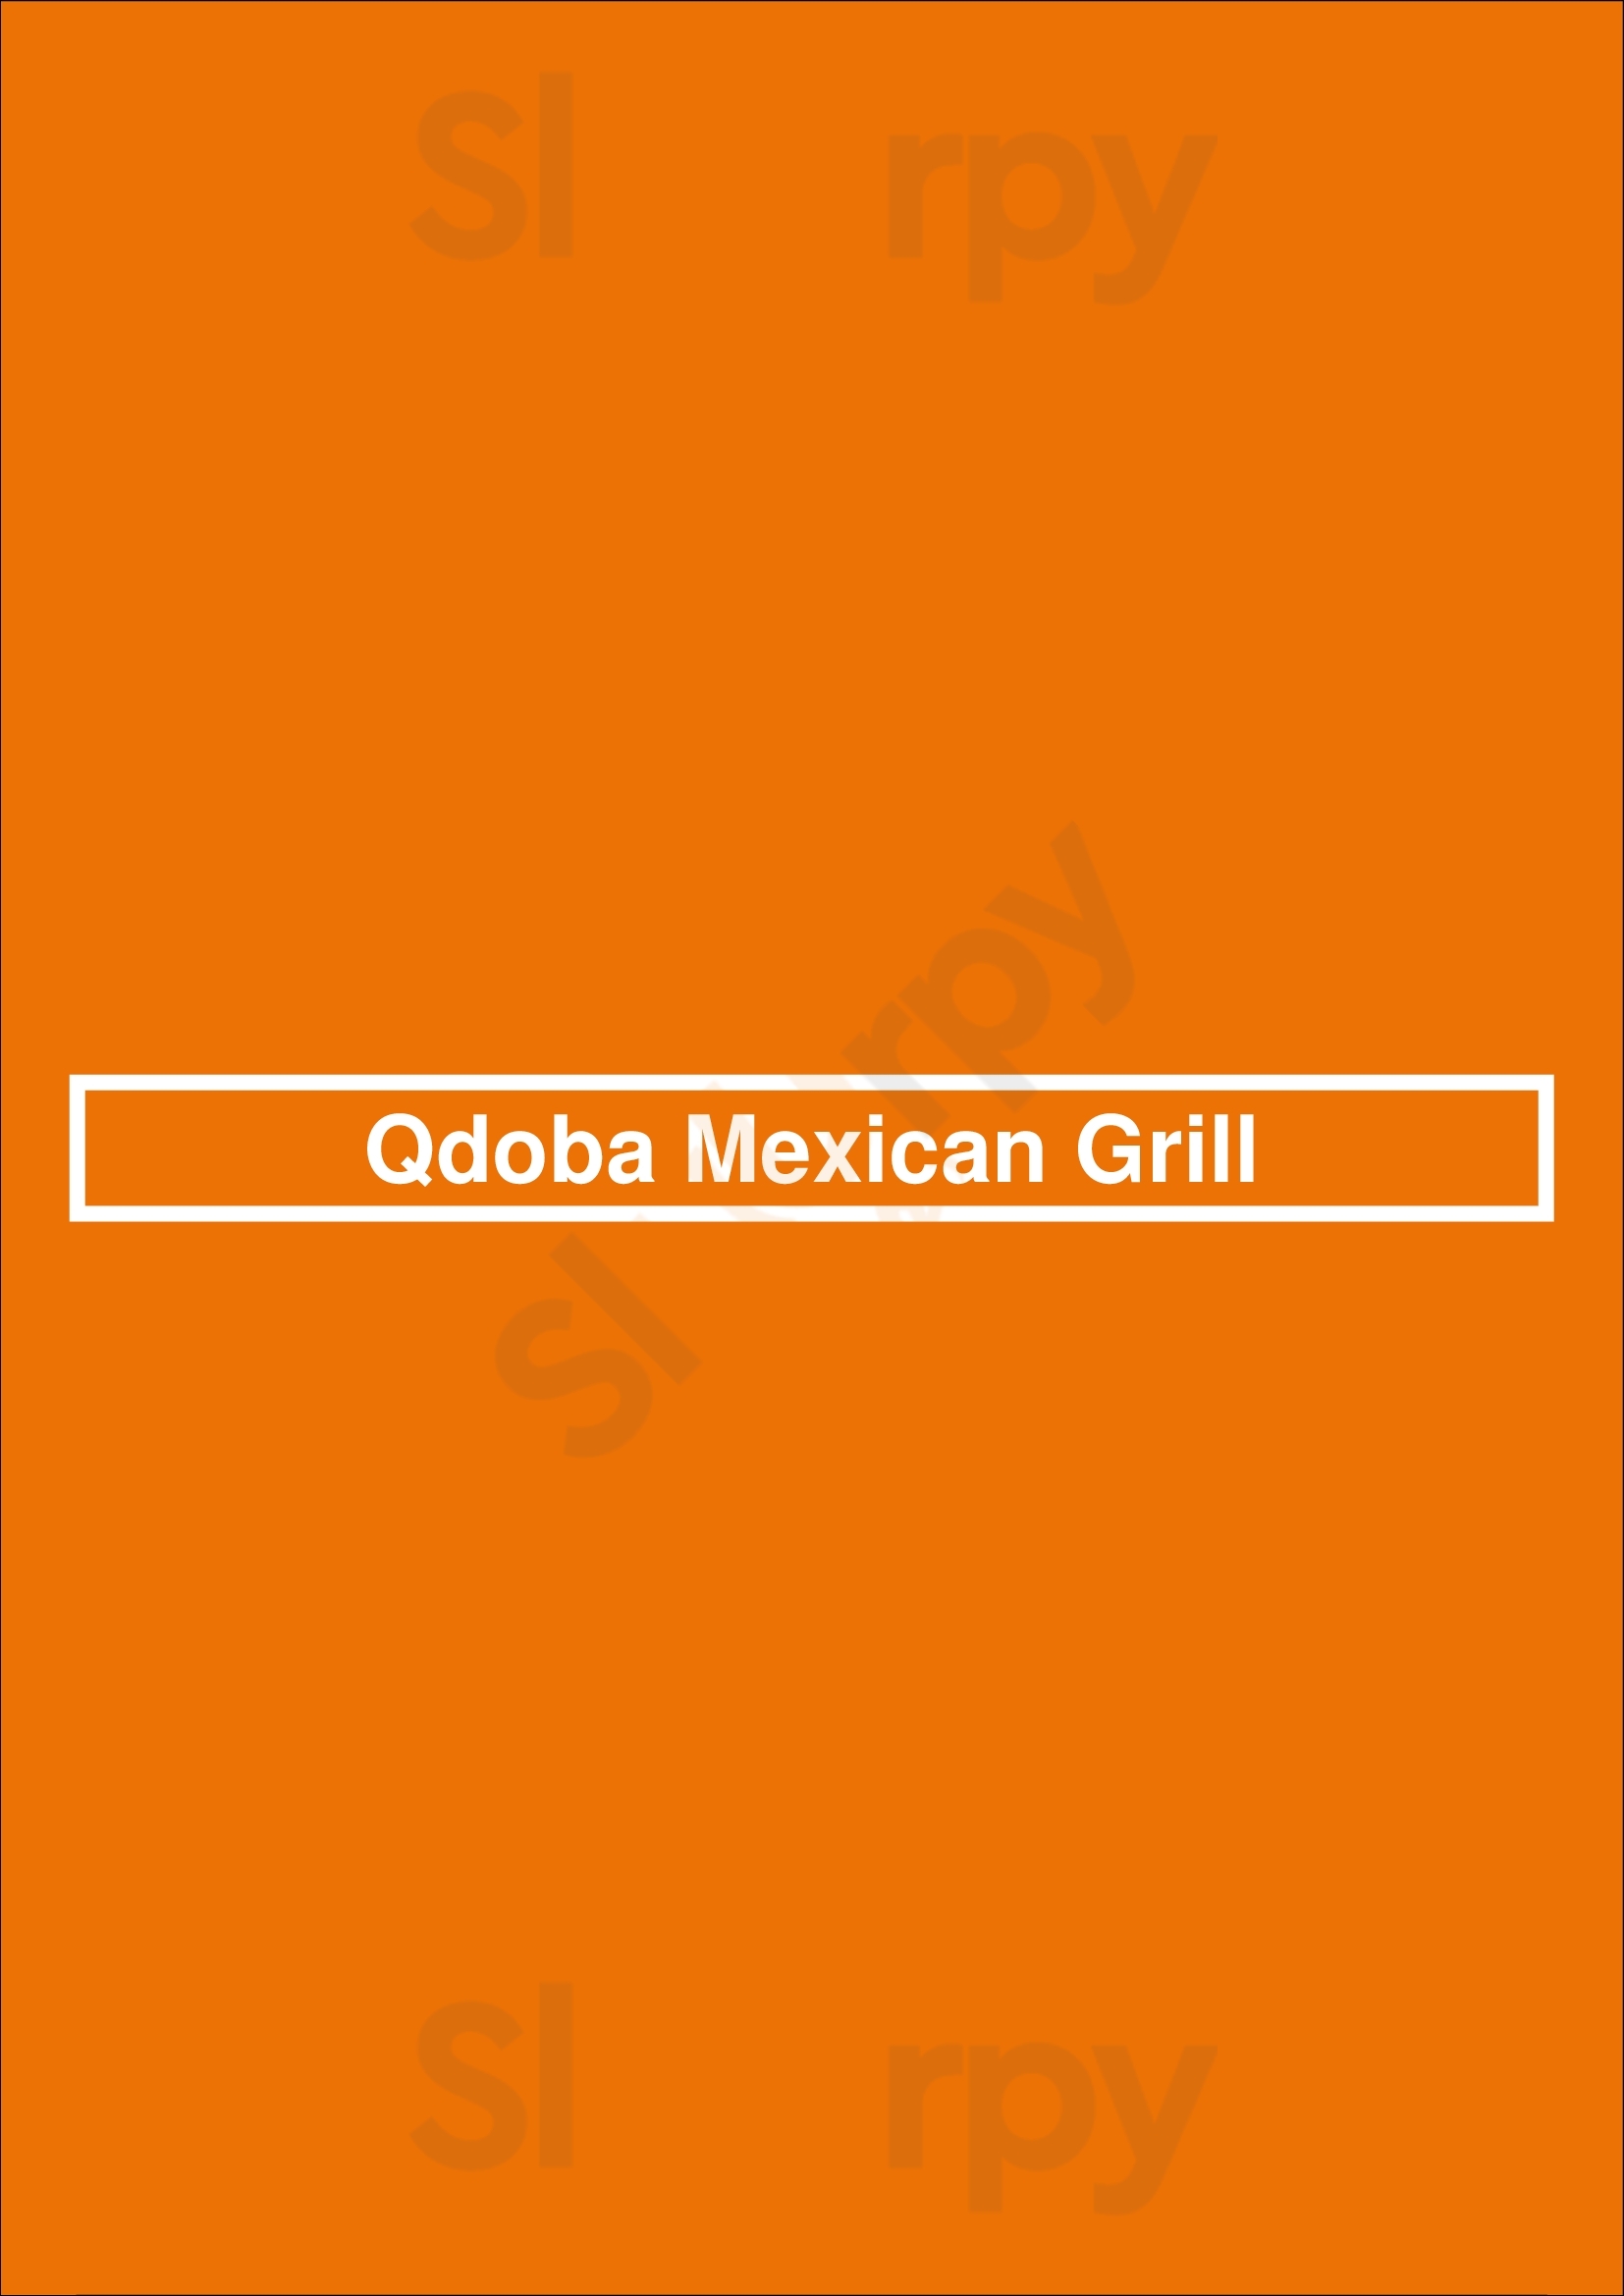 Qdoba Mexican Grill Saint Louis Menu - 1